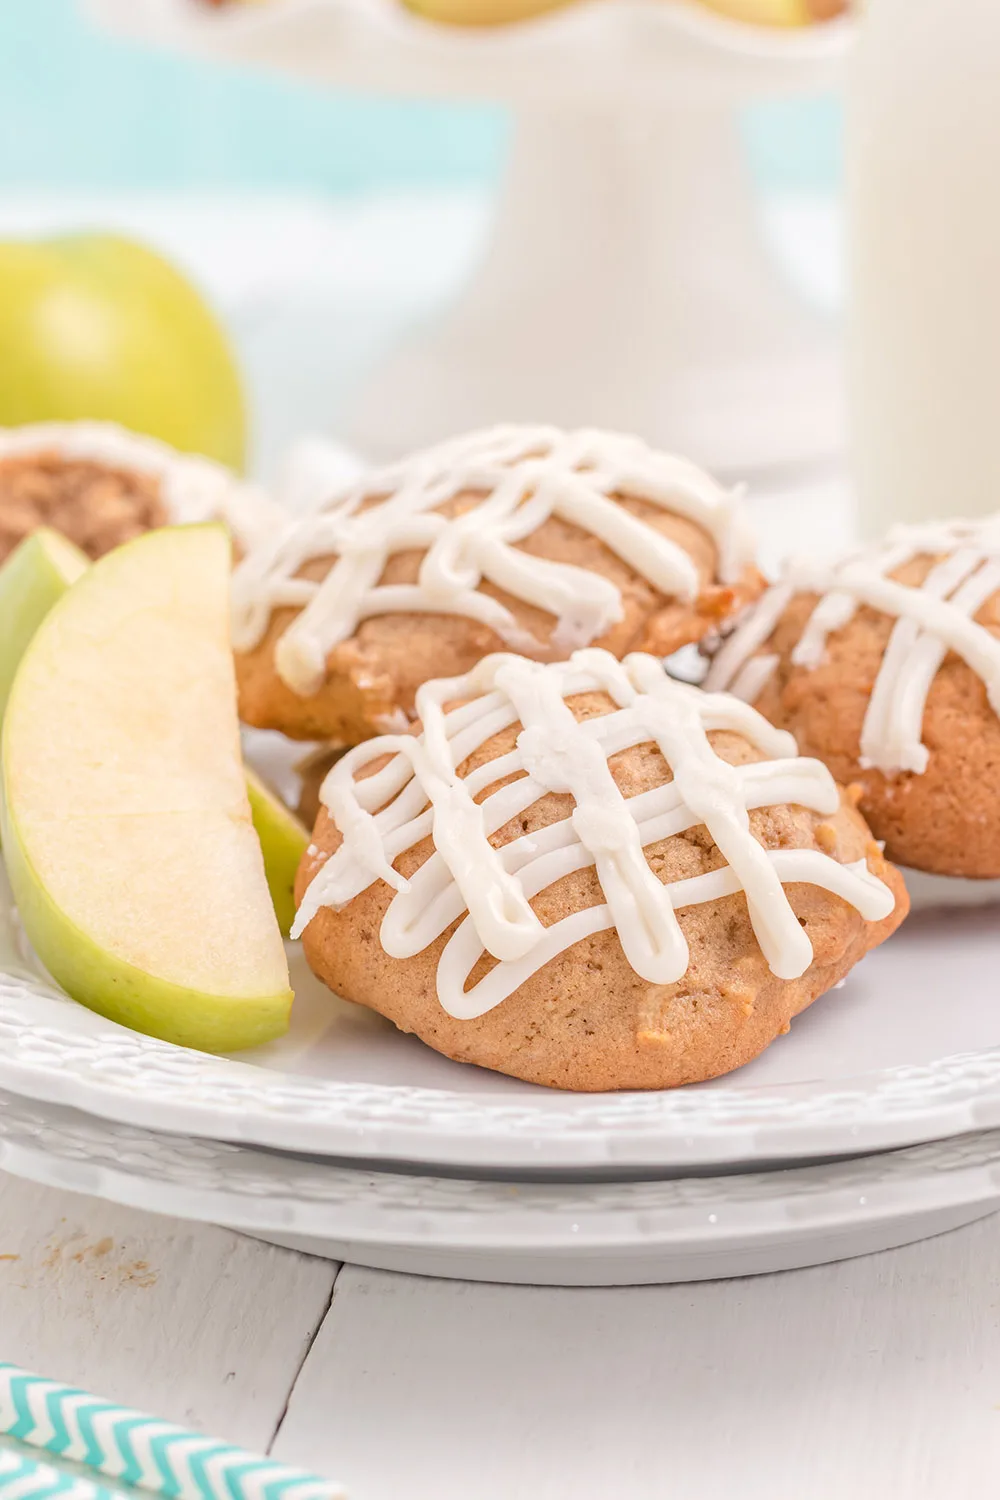 Glazed apple cookies on a plate.